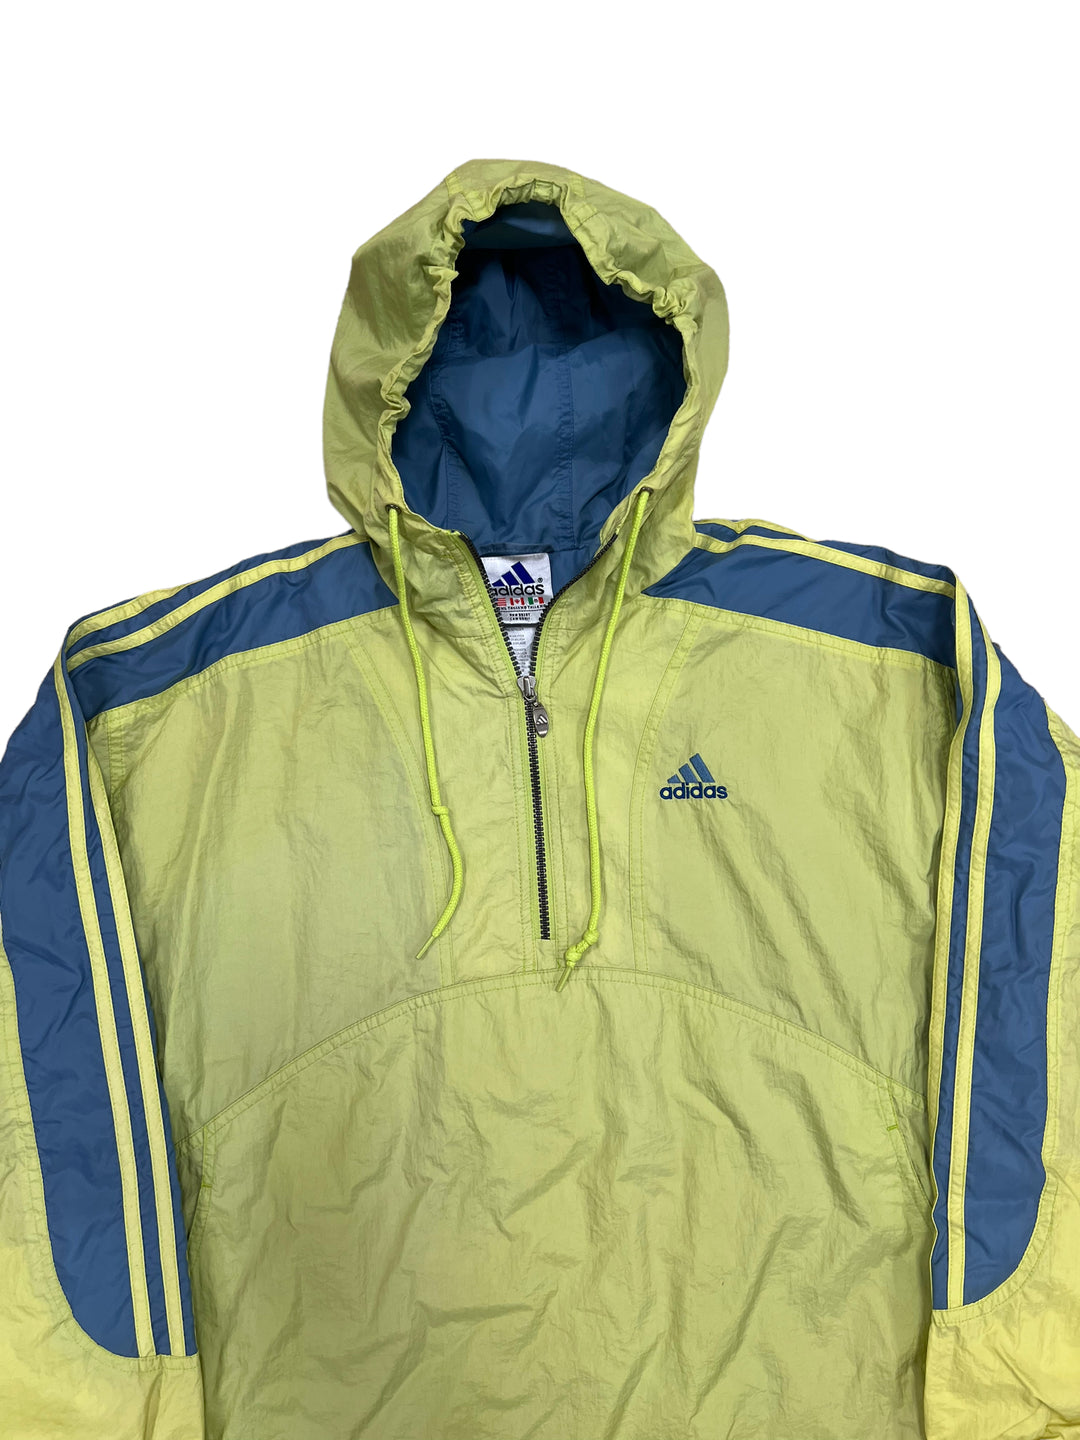 Adidas 90’s highlighter Hooded Zip Windbreaker Jacket Men’s Large